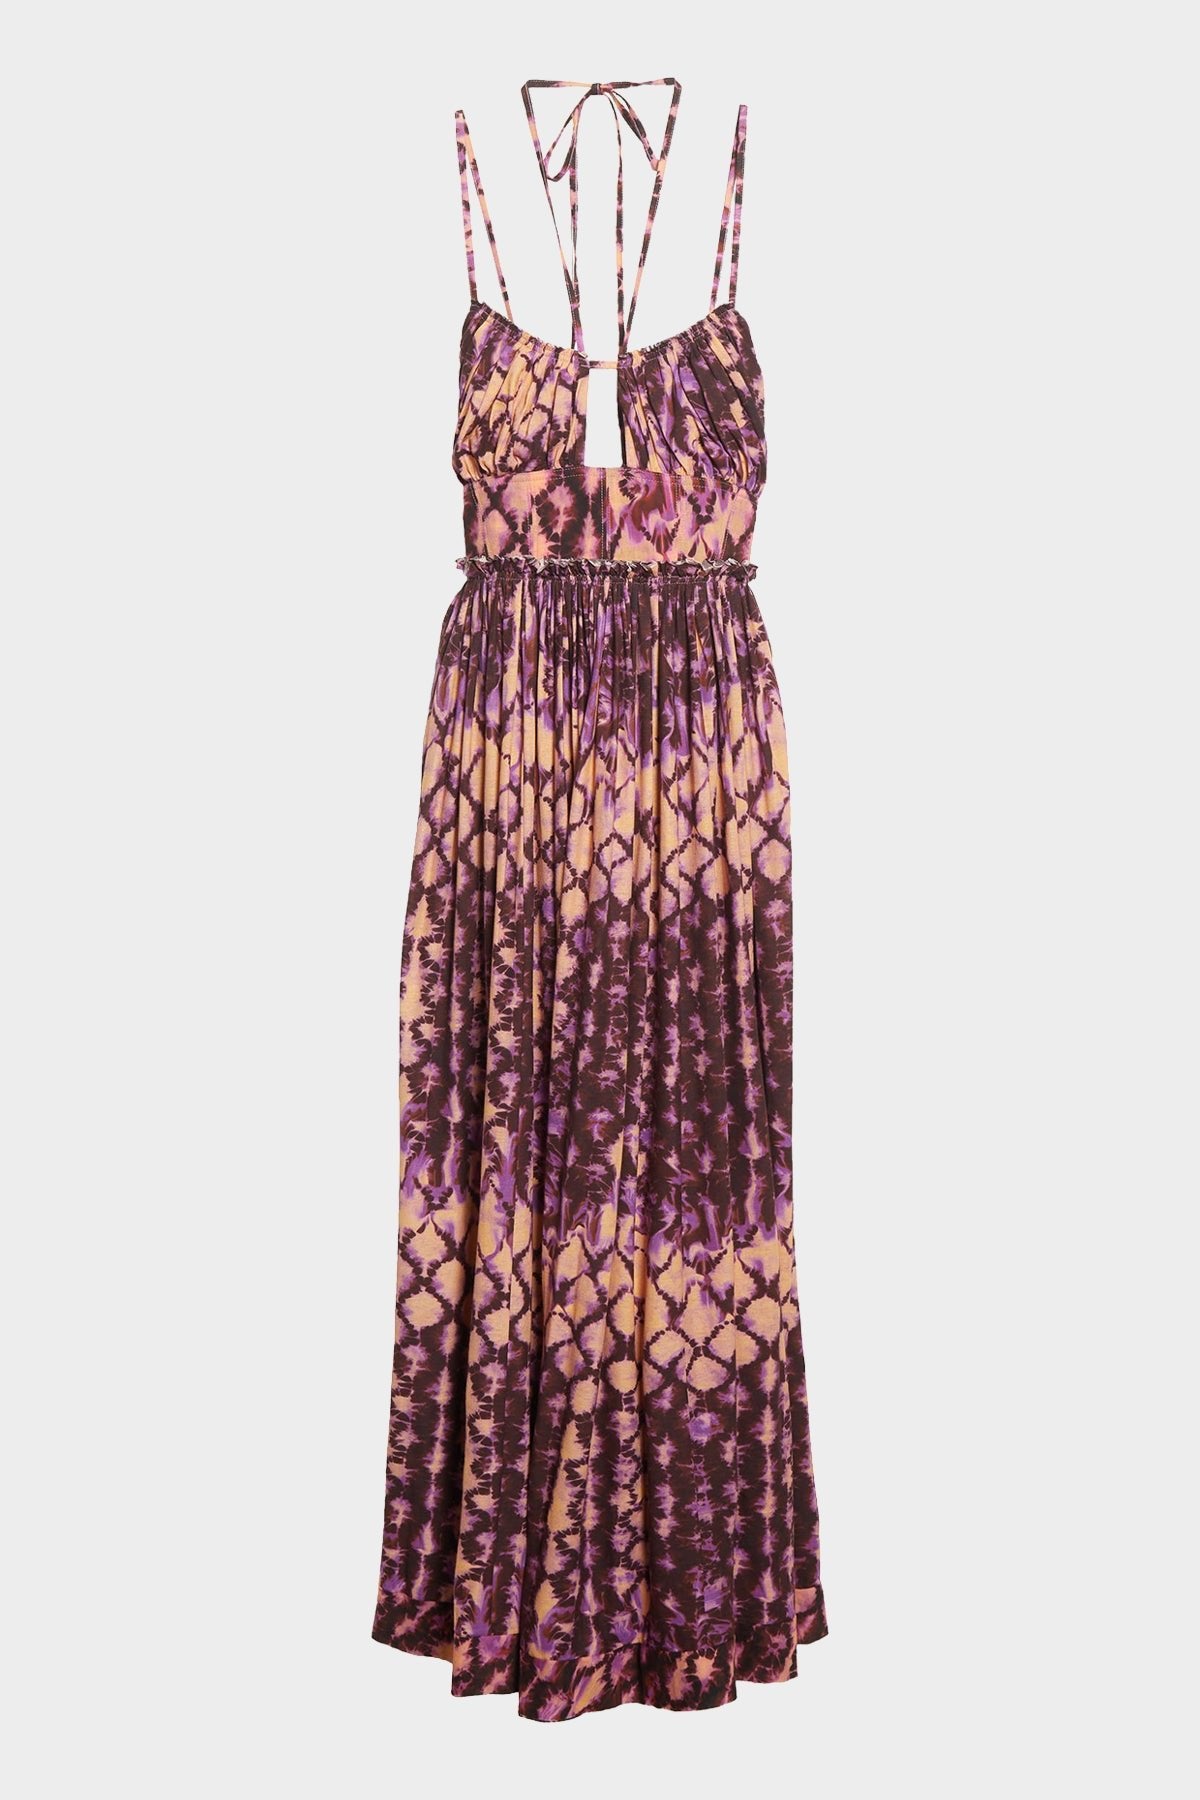 Freya Midi Dress in Wisteria - shop-olivia.com